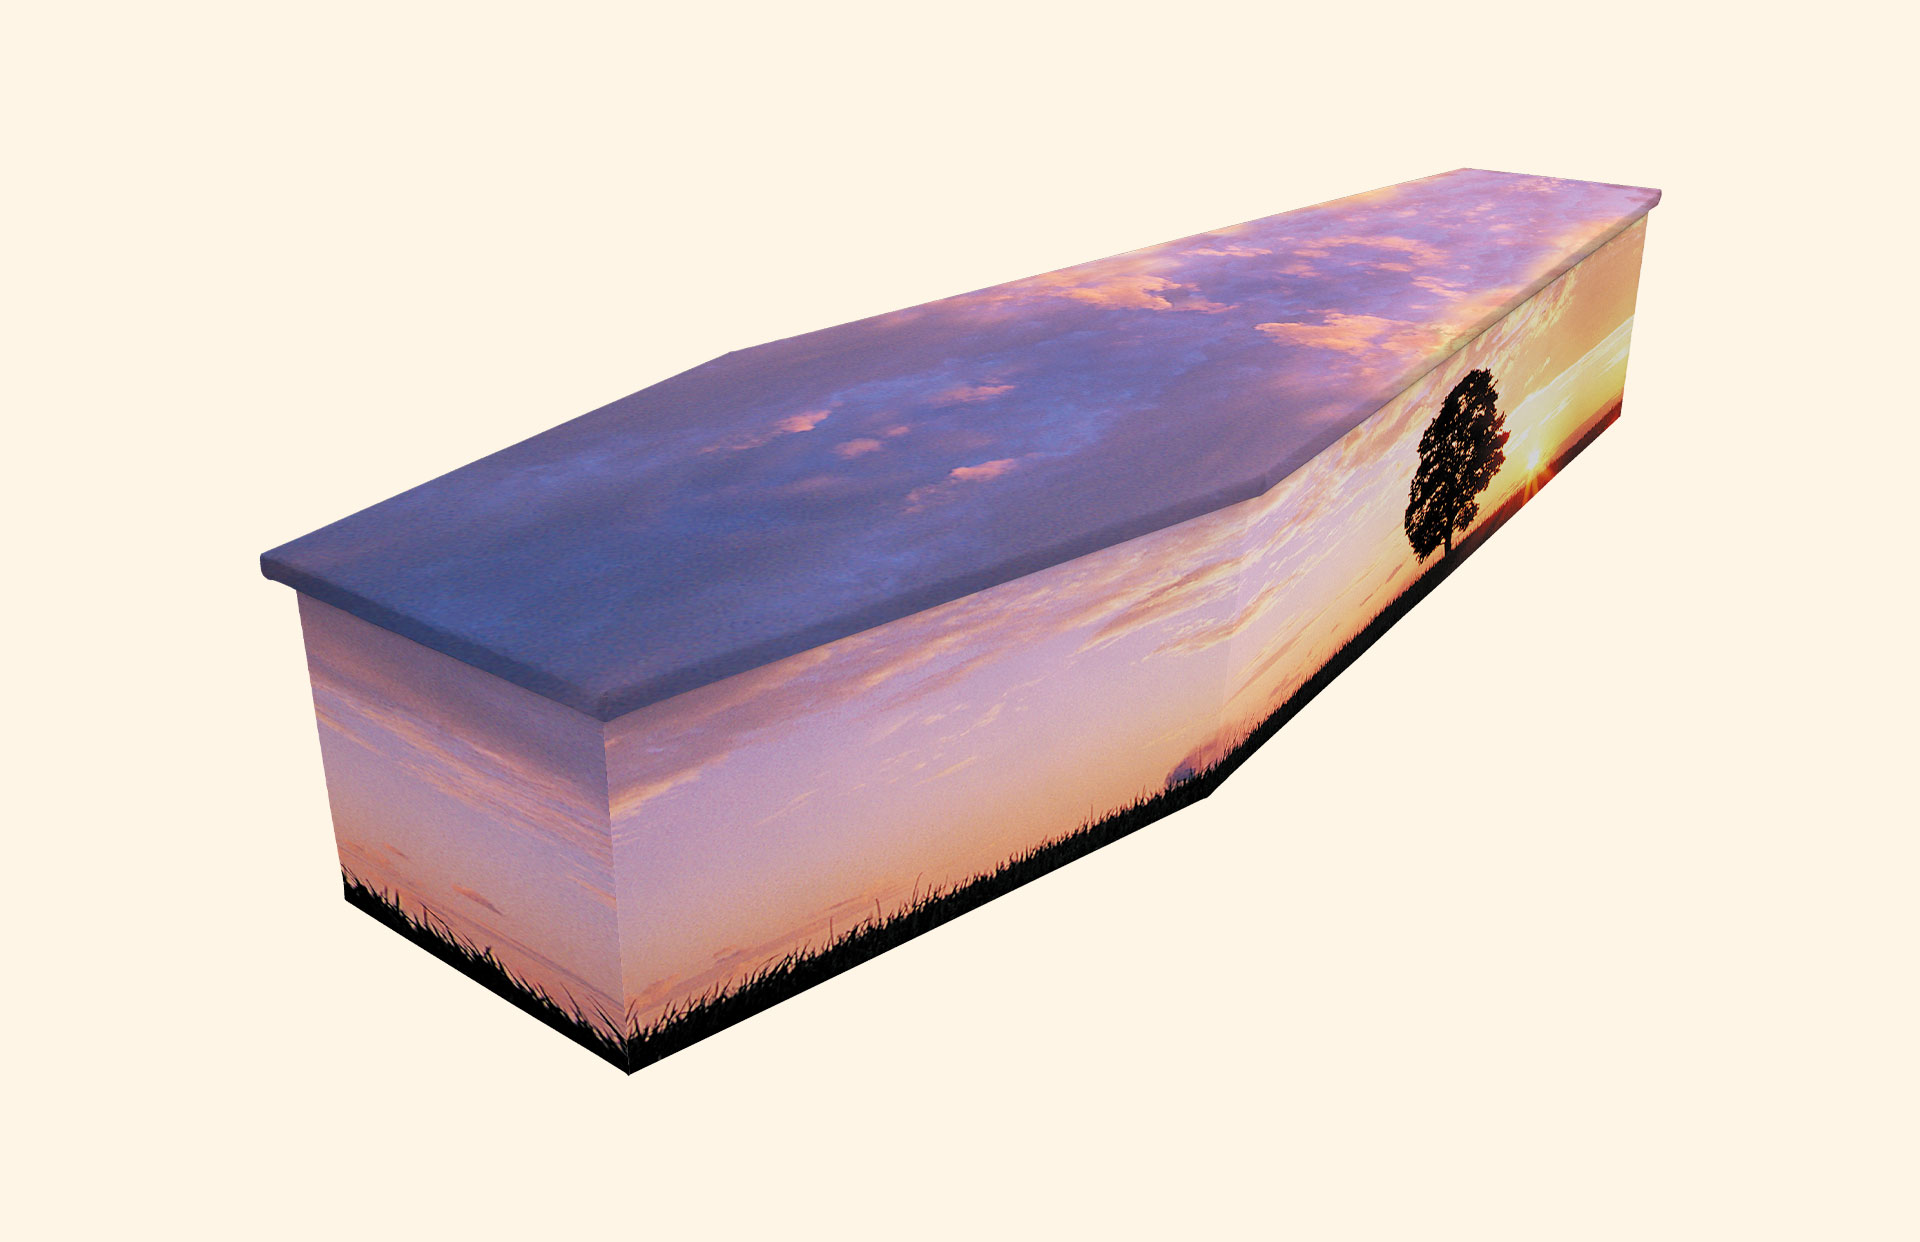 Sunset design on a cardboard coffin